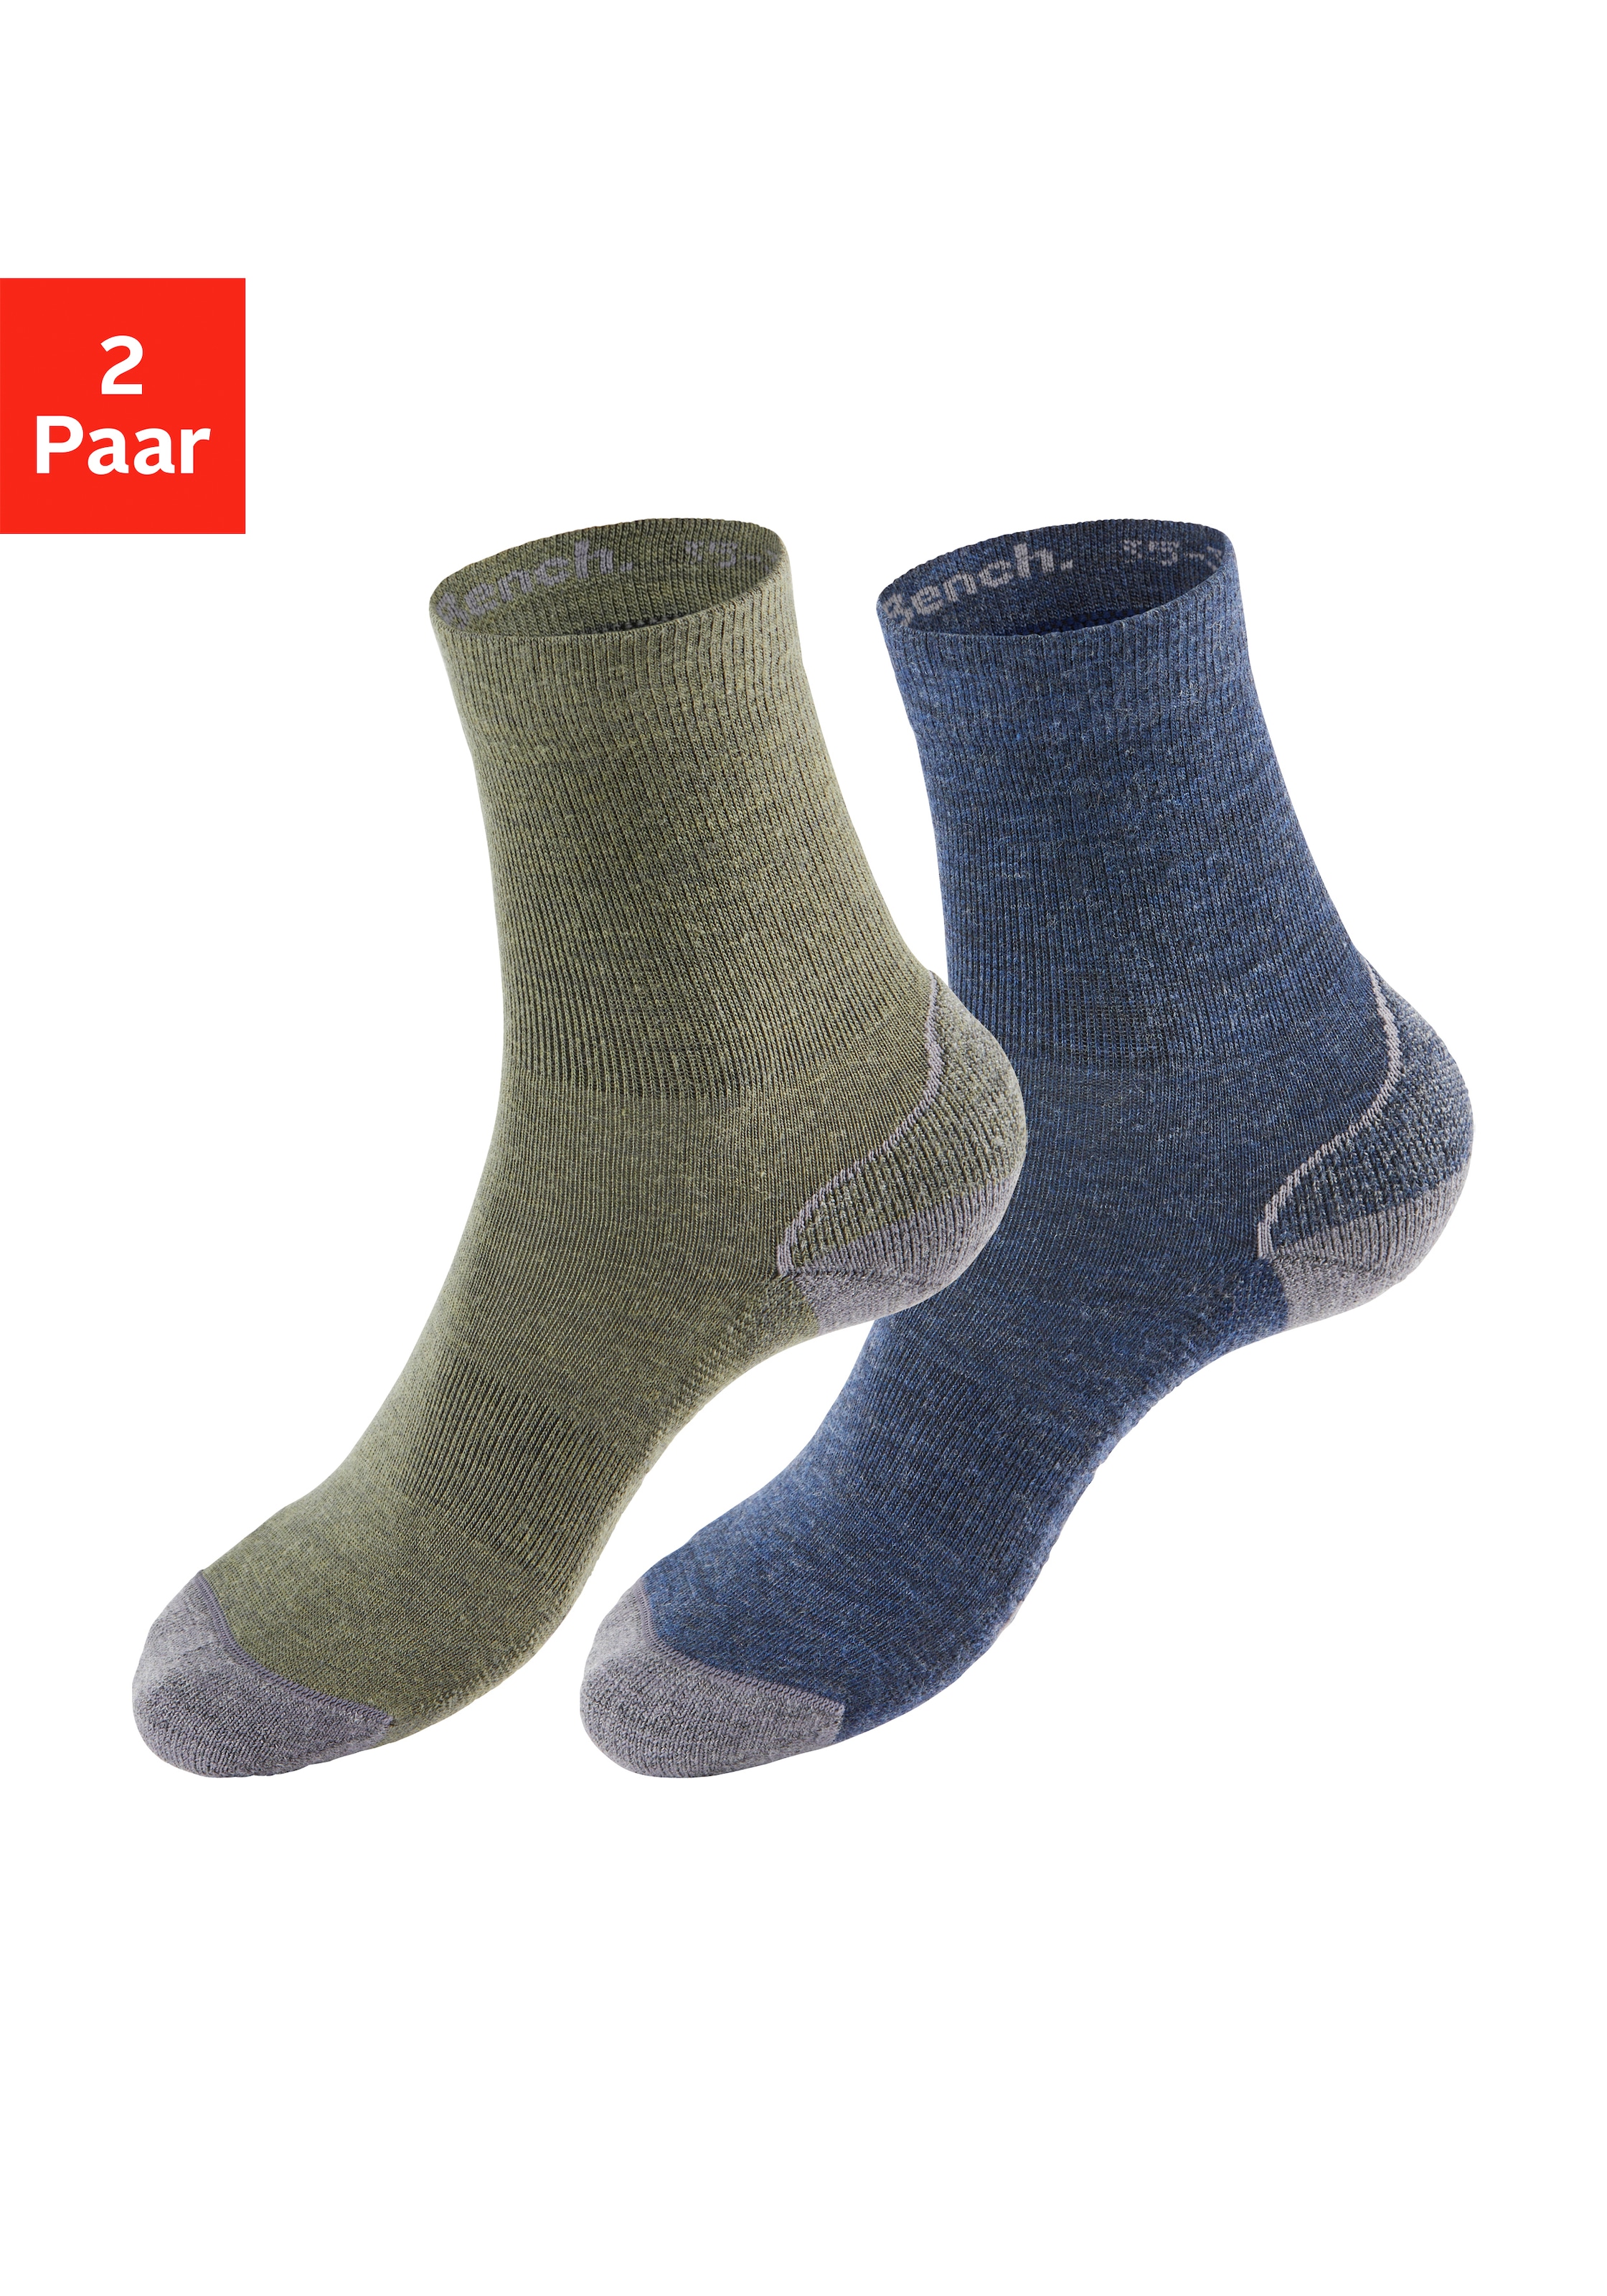 Grüne Socken für Damen kaufen ▷ Mintgrün & Olivgrün | BAUR